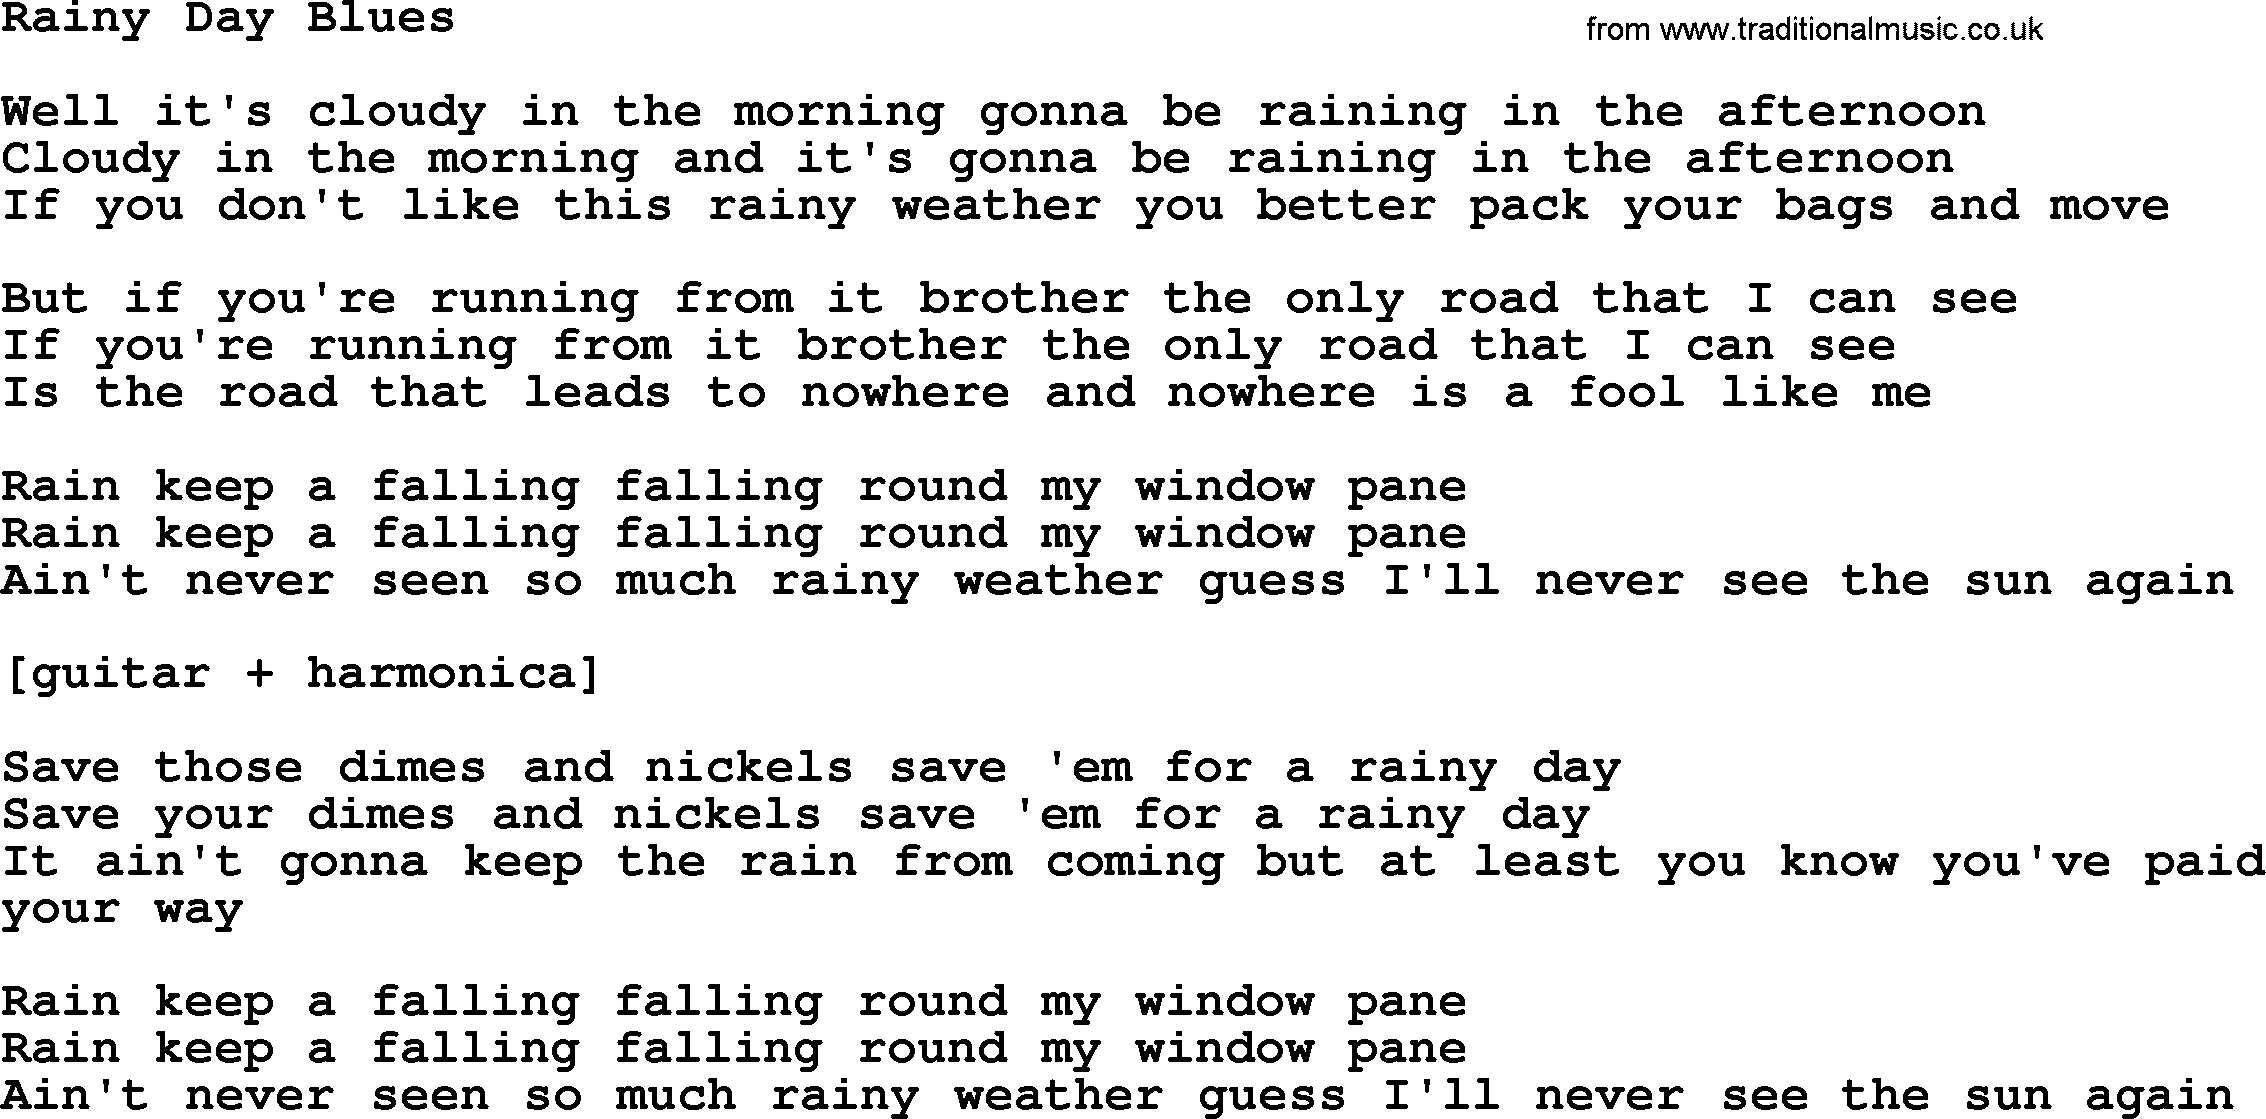 Willie Nelson song: Rainy Day Blues lyrics